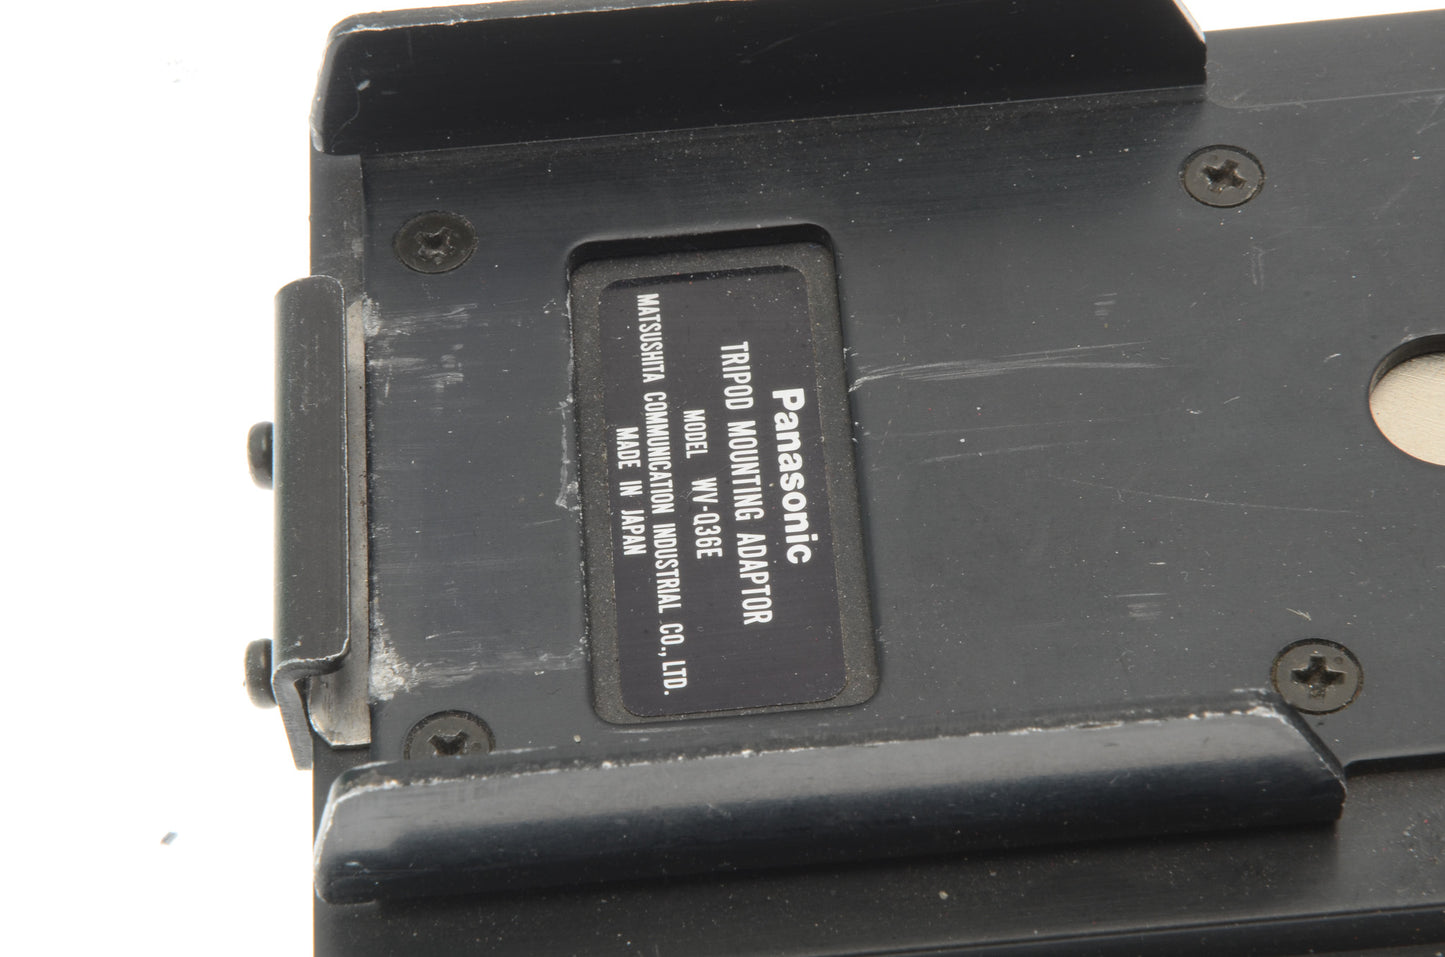 Panasonic WV-Q36E Tripod Mounting Adaptor